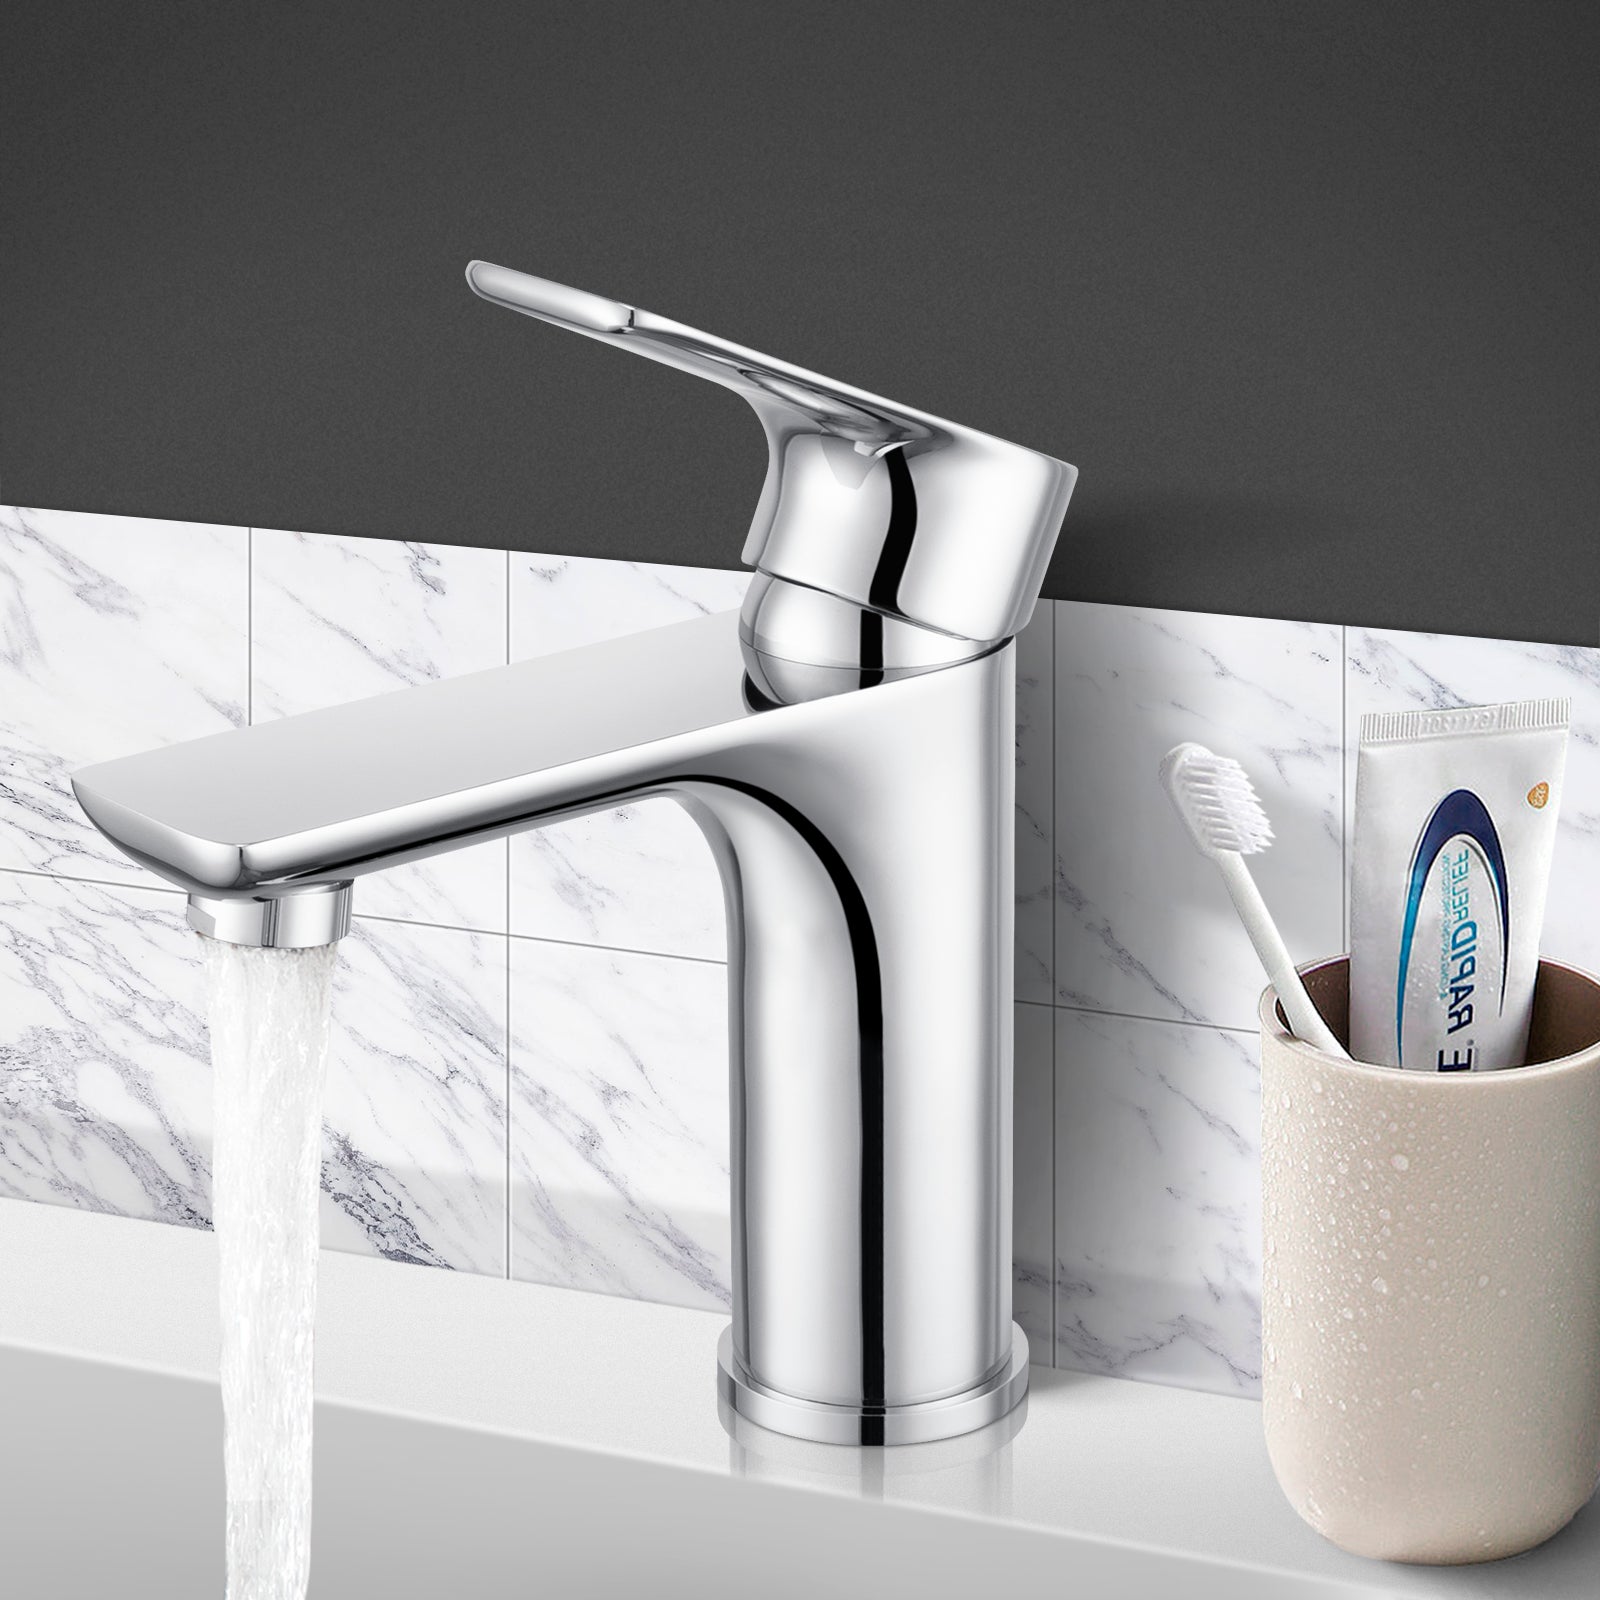 ACA Bathroom Chrome Basin Mixer Tap Sink Solid Brass Faucet WELS